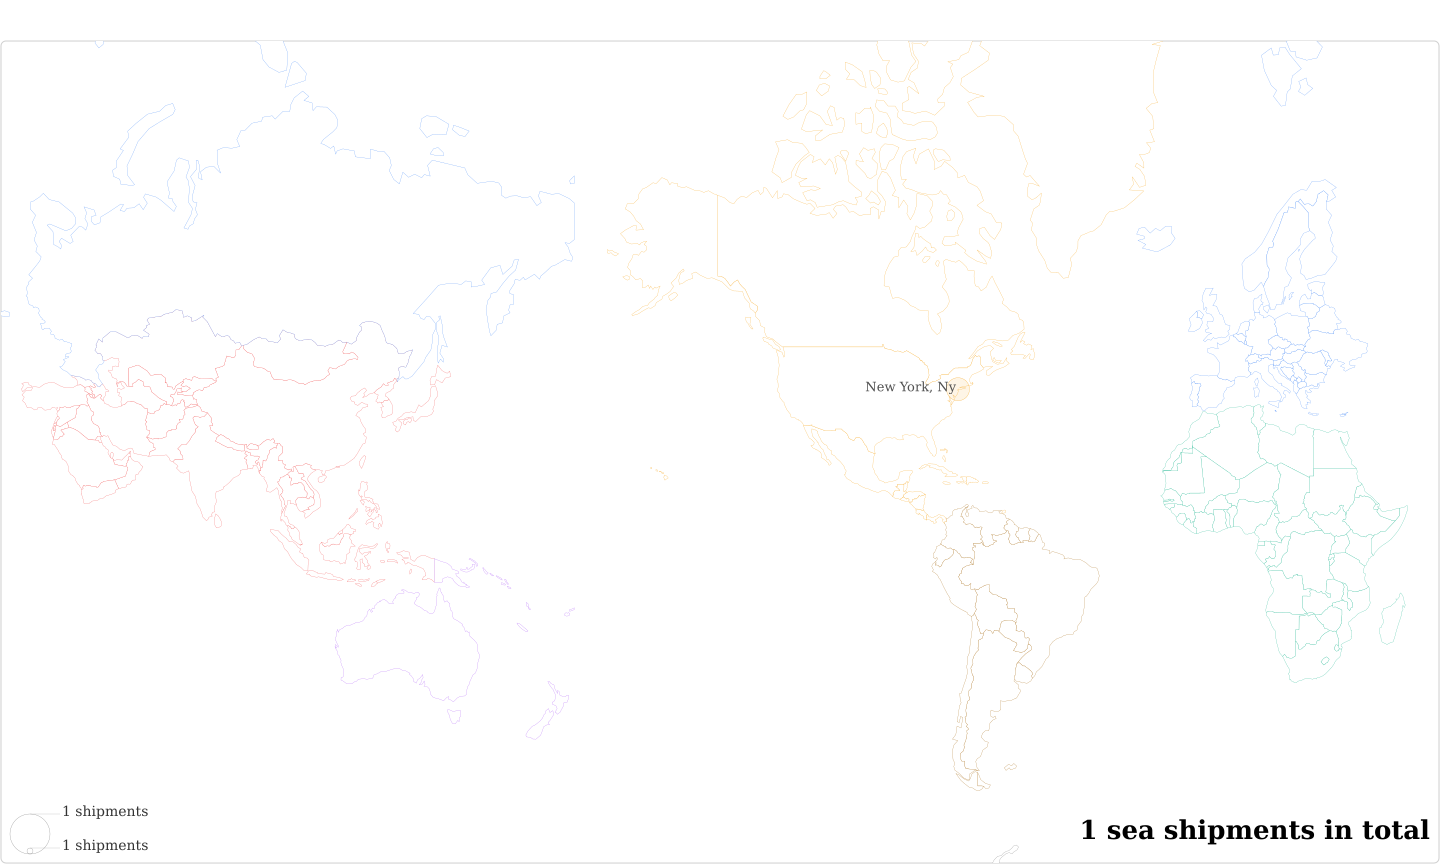 Kerekes Bakery & Restaurant Eq's Imports Per Country Map